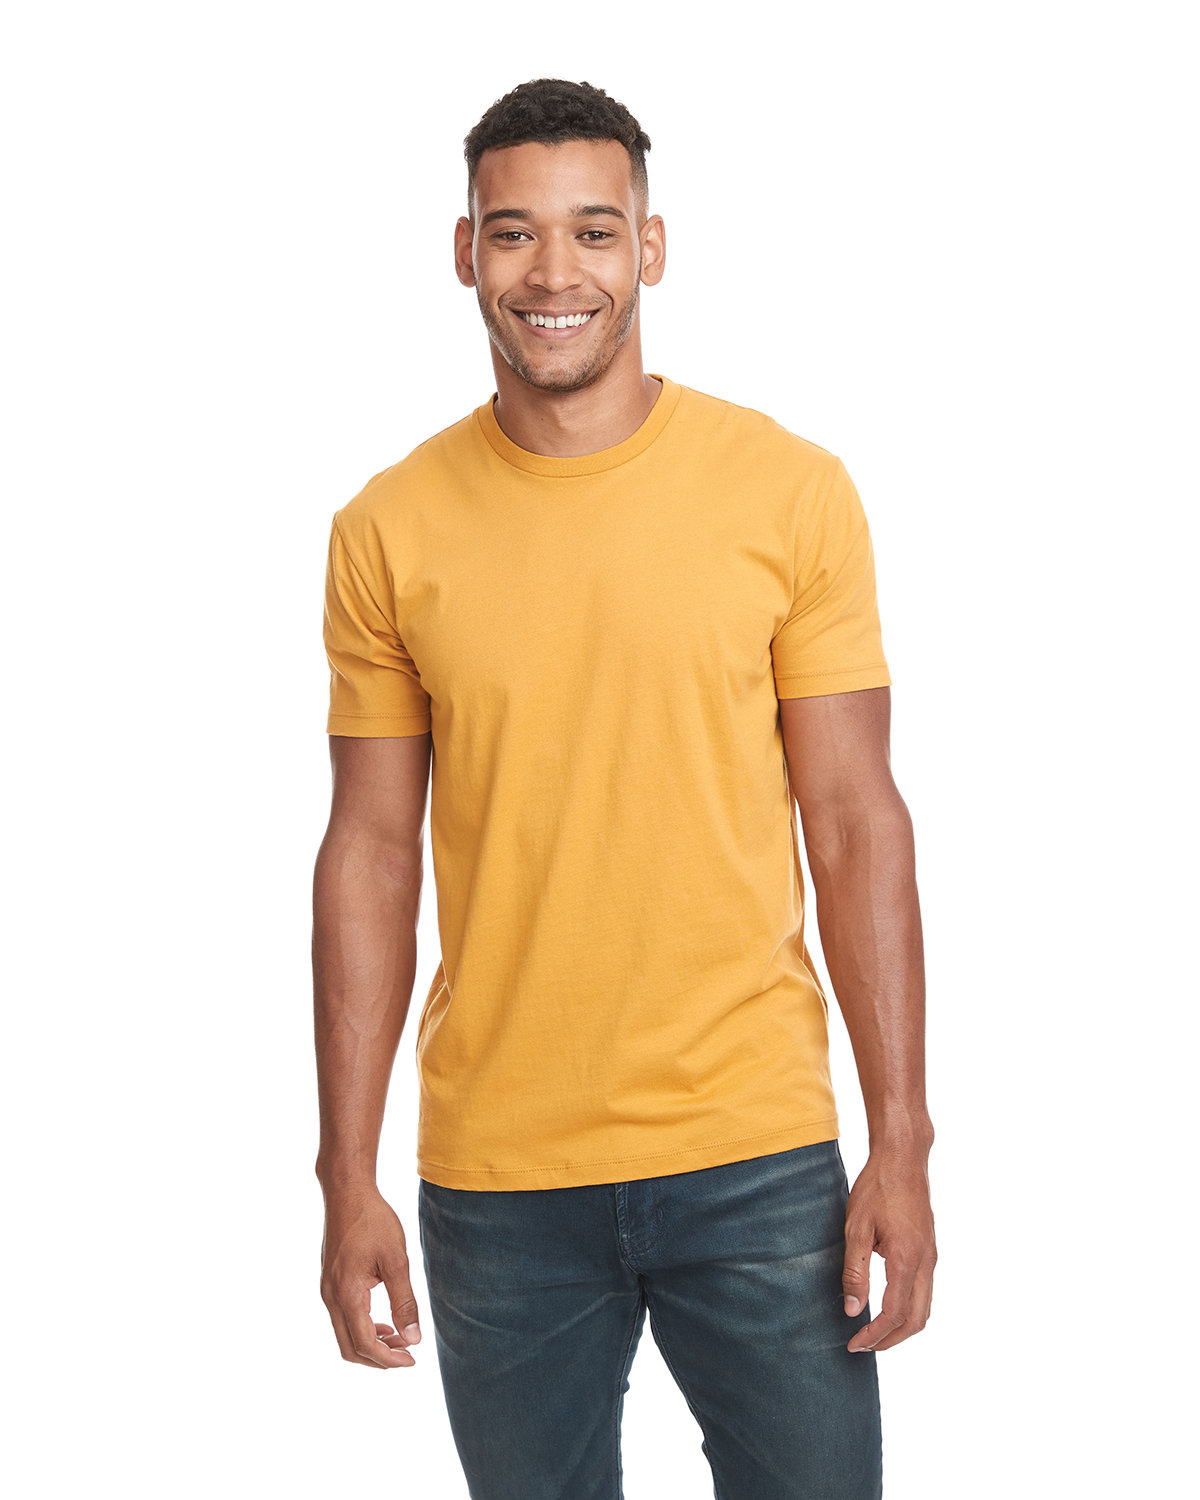 Yellow T-shirts for Women